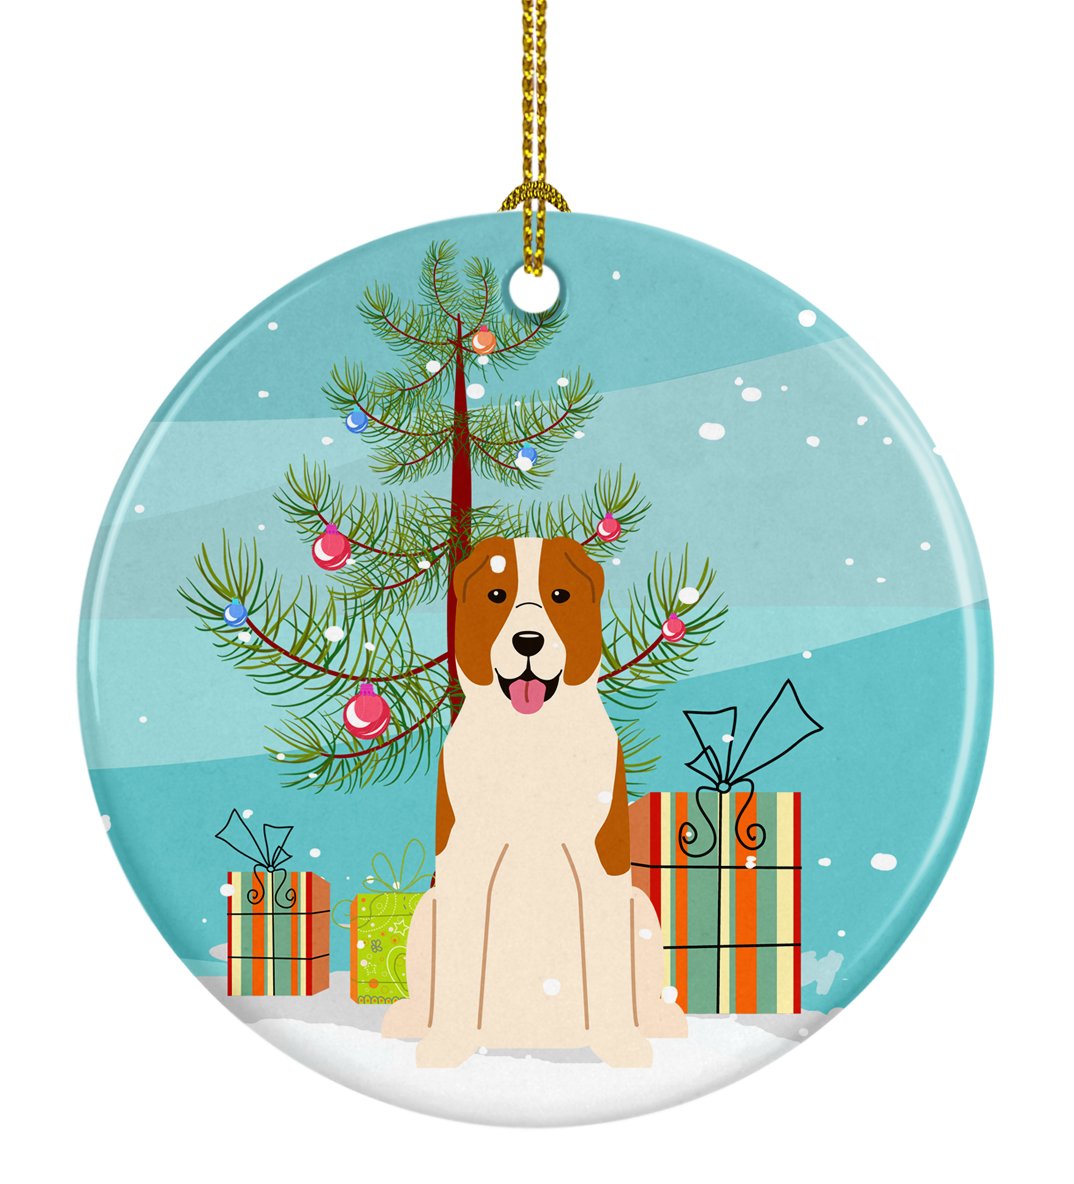 Merry Christmas Tree Central Asian Shepherd Dog Ceramic Ornament BB4174CO1 by Caroline's Treasures